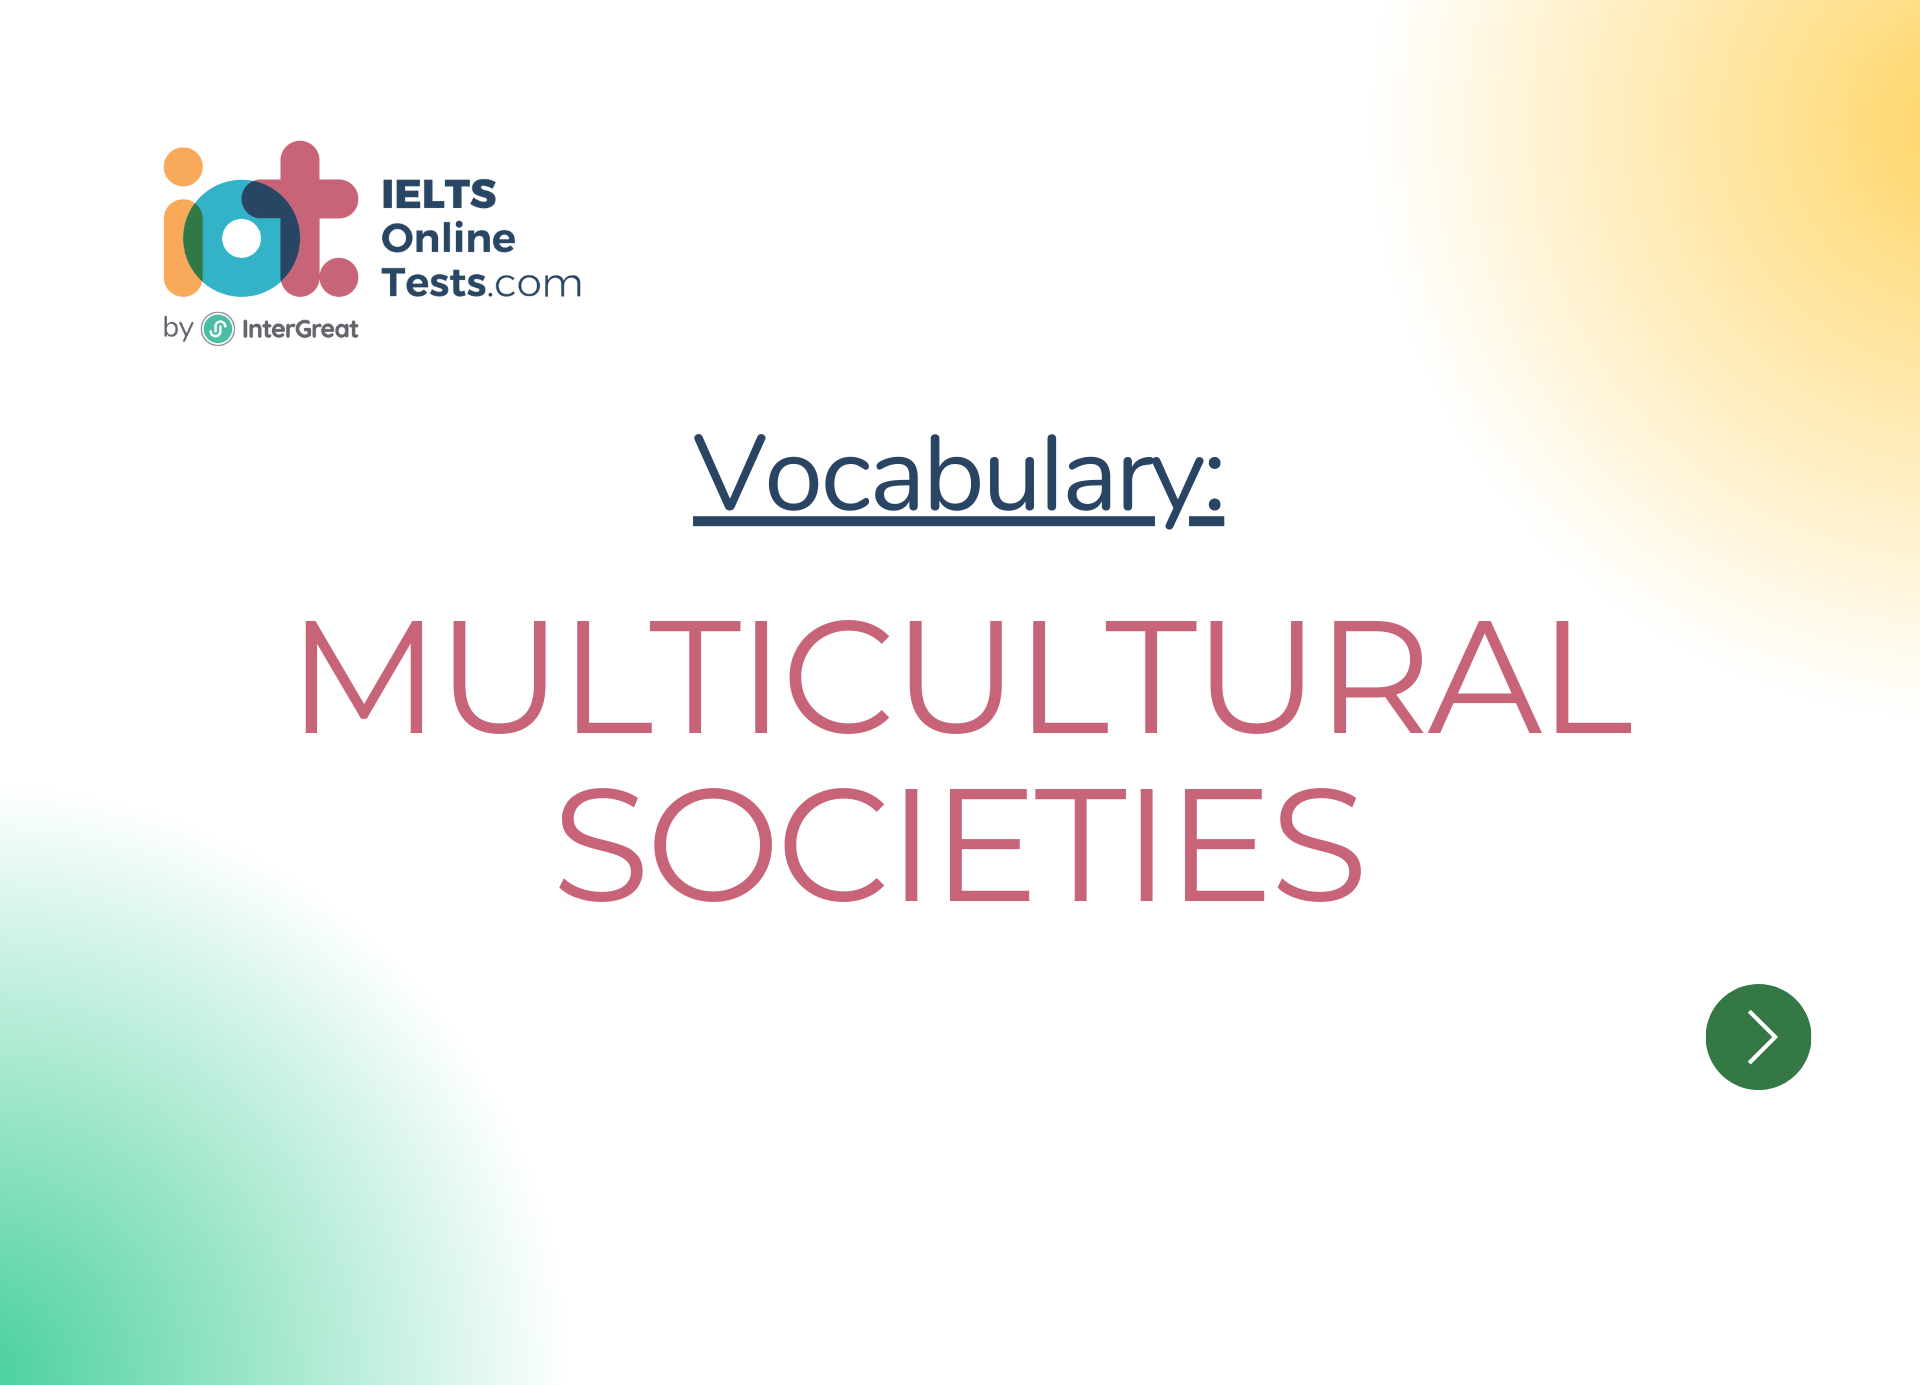 Multicultural societies